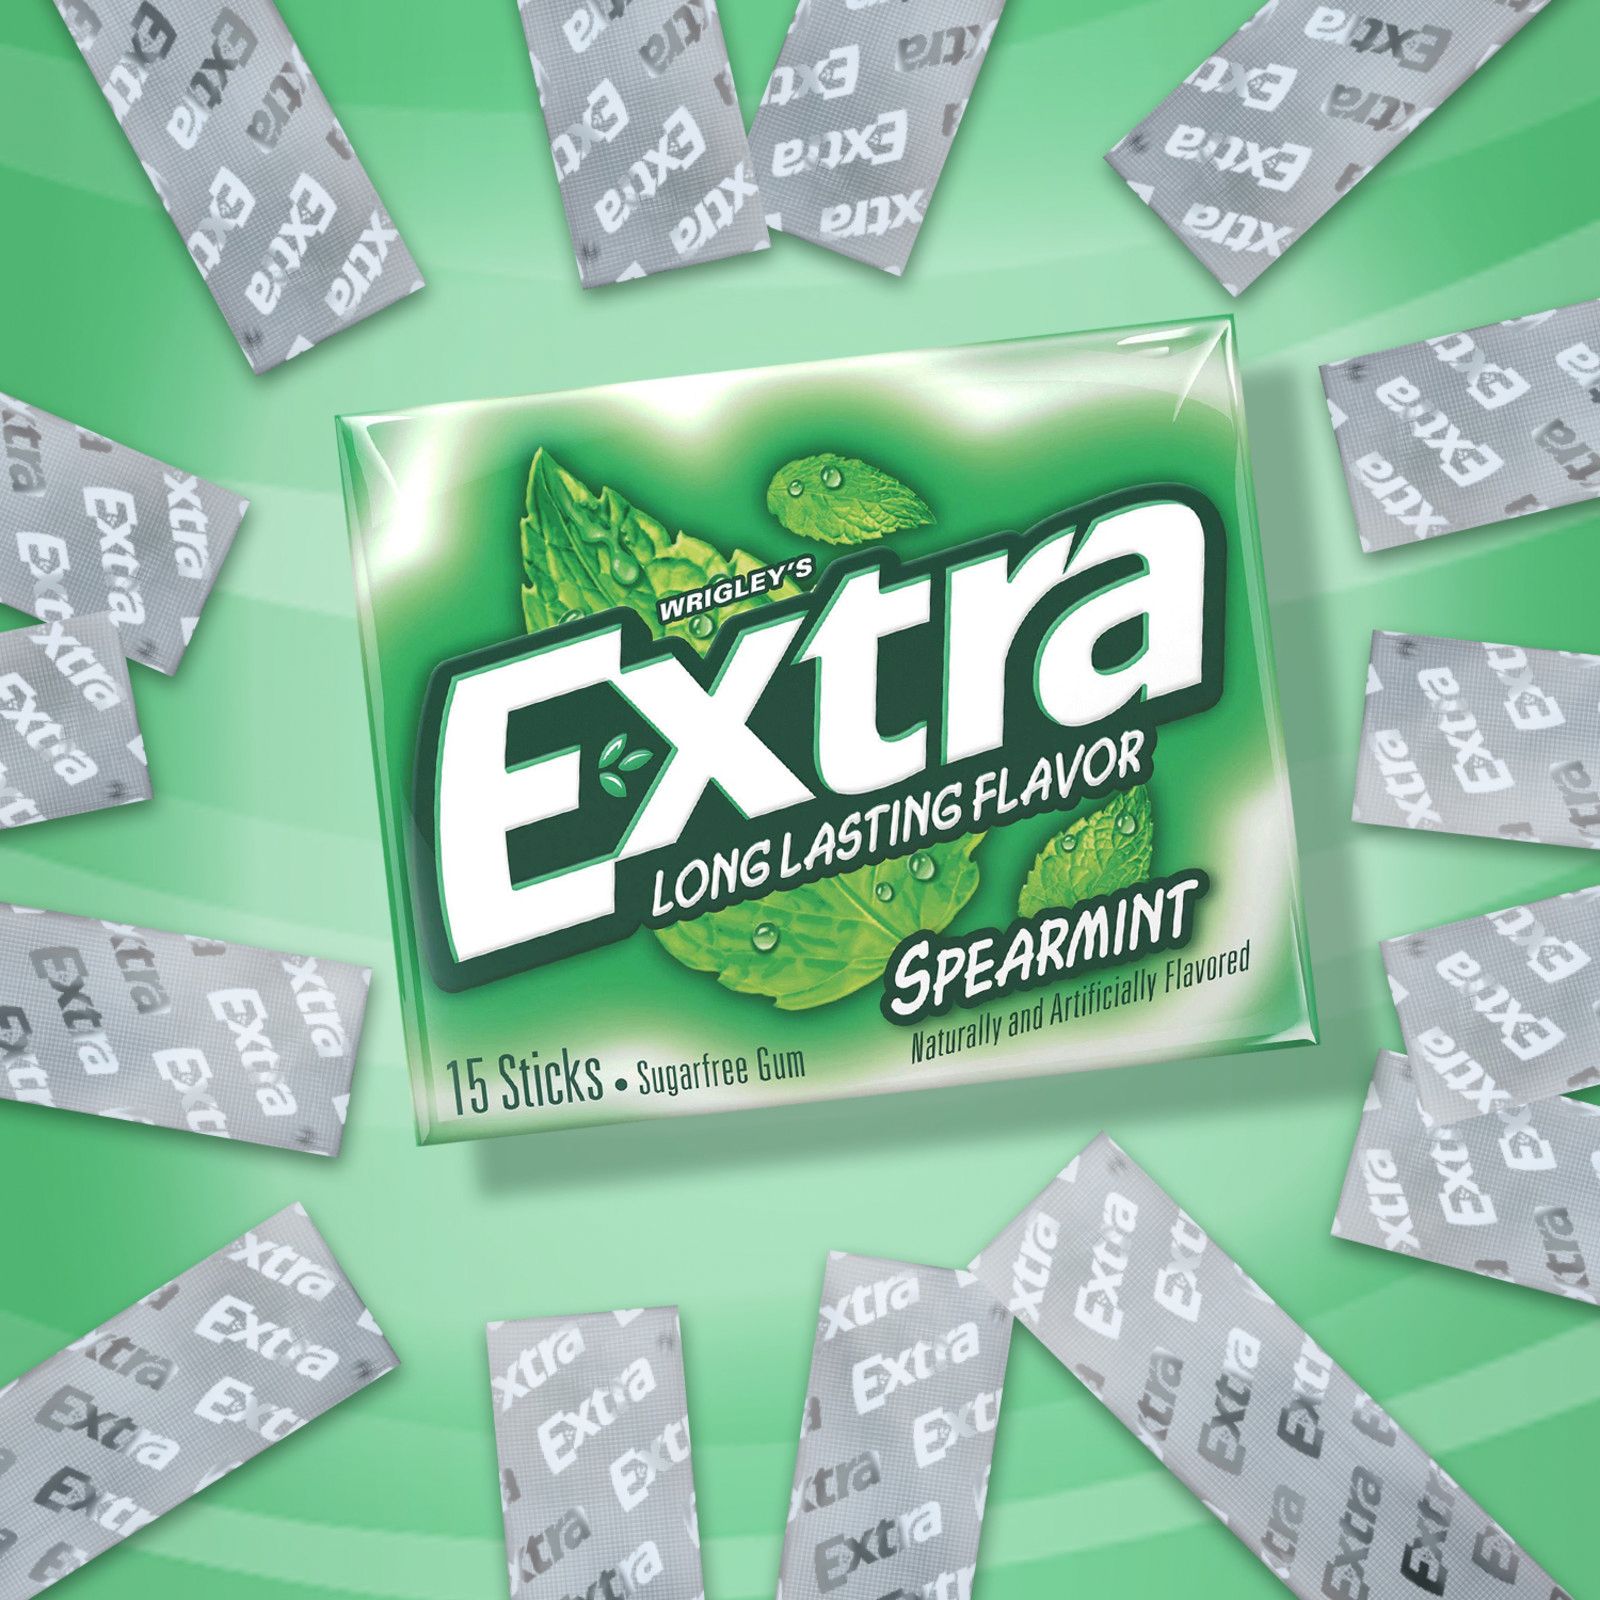 Extra Gum Spearmint Sugar-Free Chewing Gum, 10 pk./15 ct.